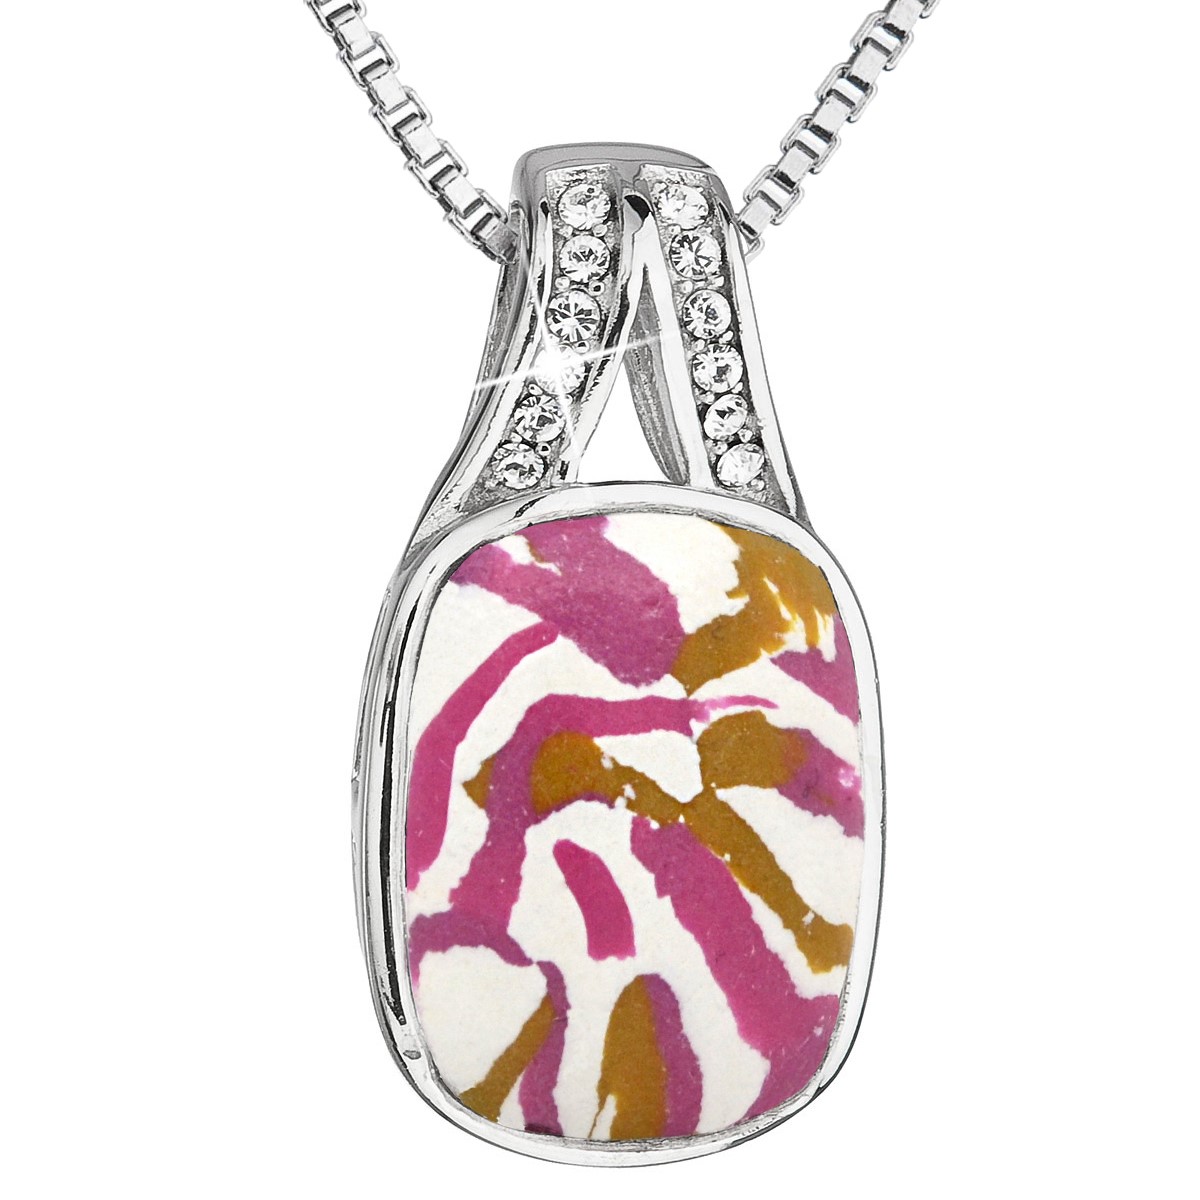 Evolution Group Stříbrný náhrdelník růžovobílý mramor s krystaly 72064.1